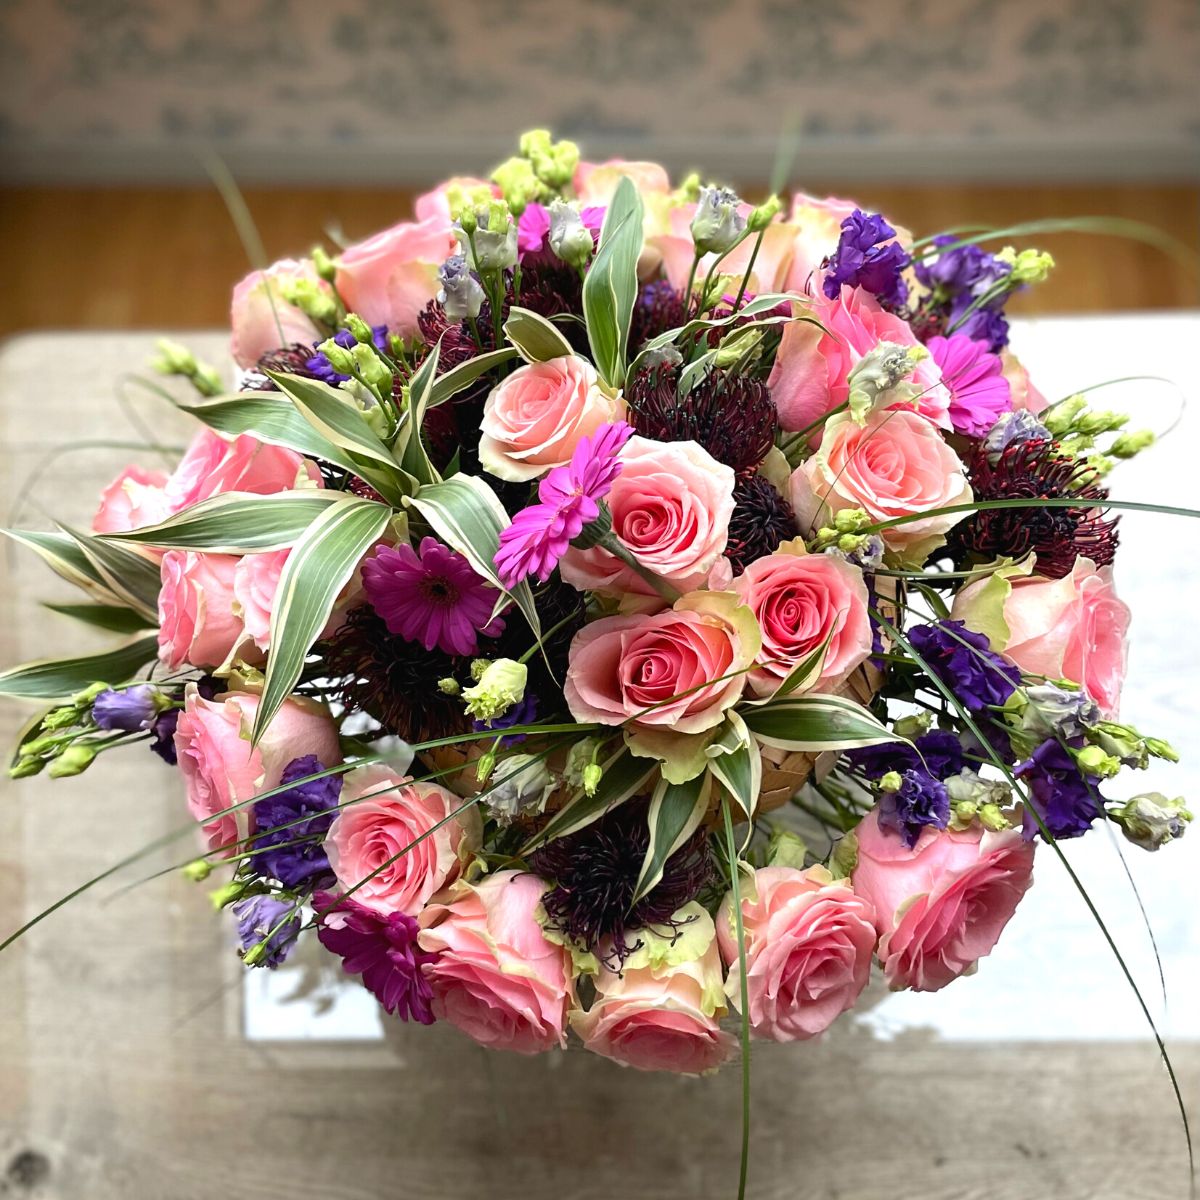 Rose Tango in a flower arrangement